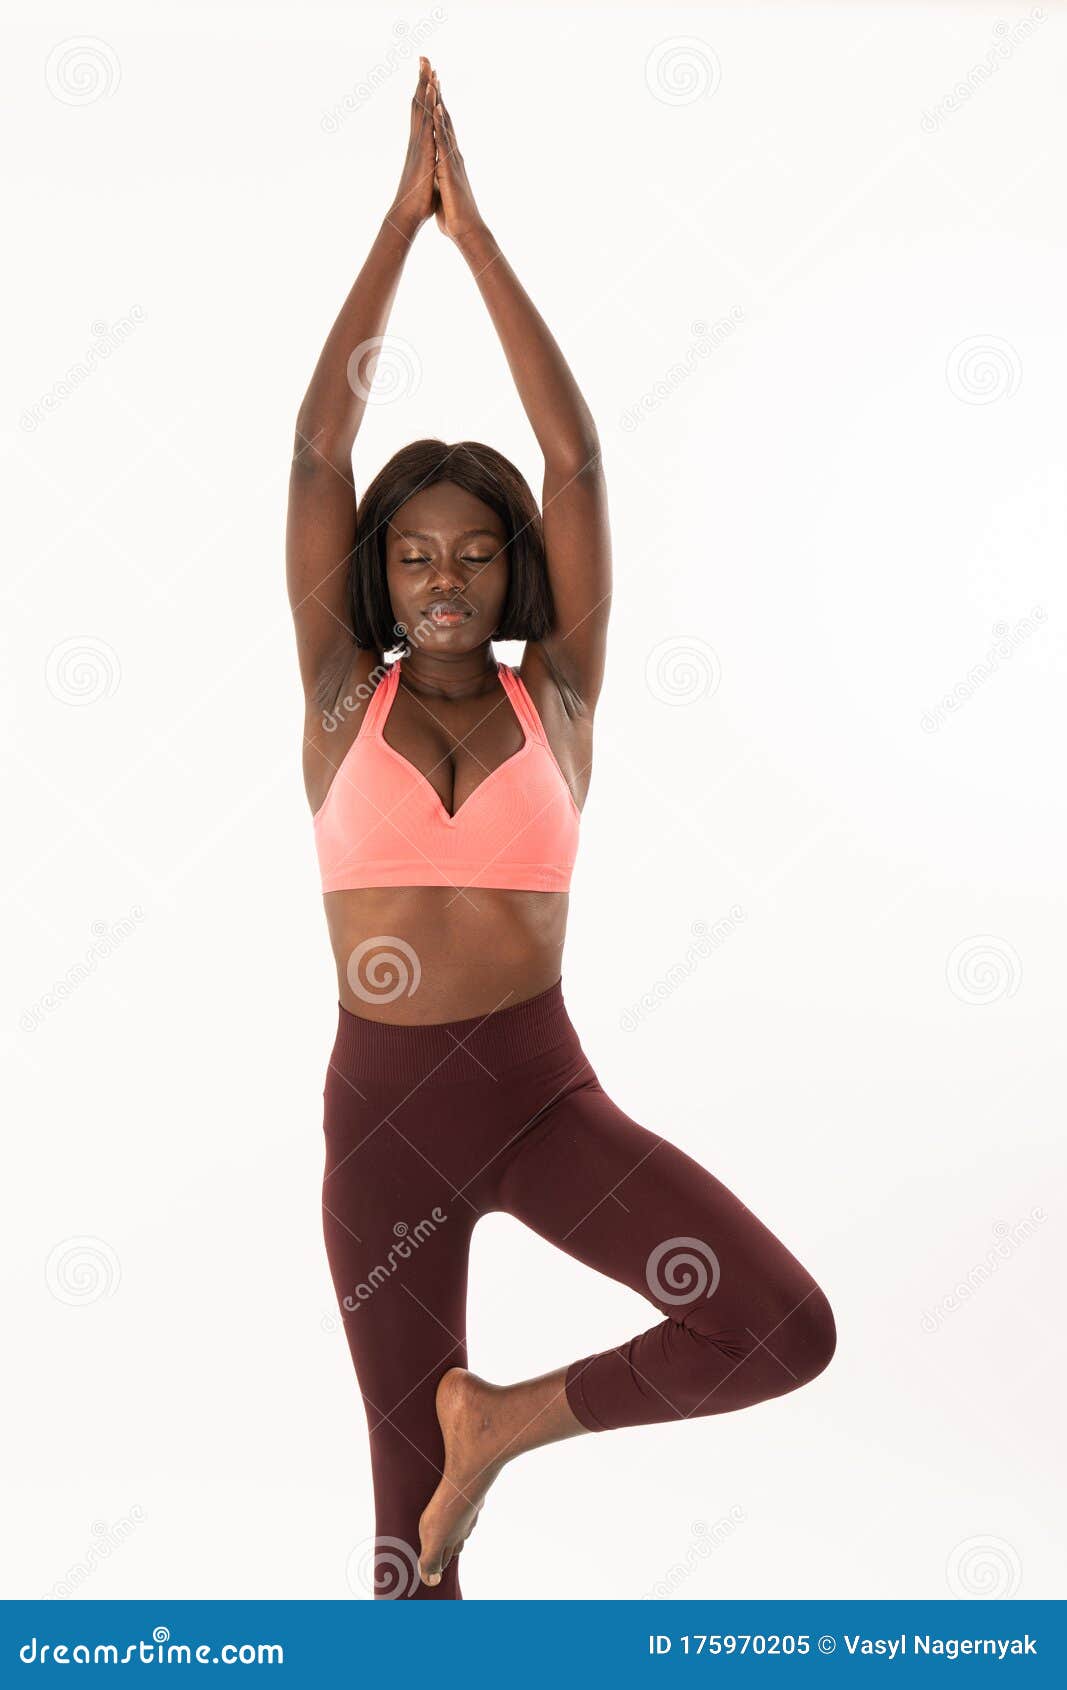 20 Standing Yoga Poses/ Asanas to Improve Balance & Flexibility